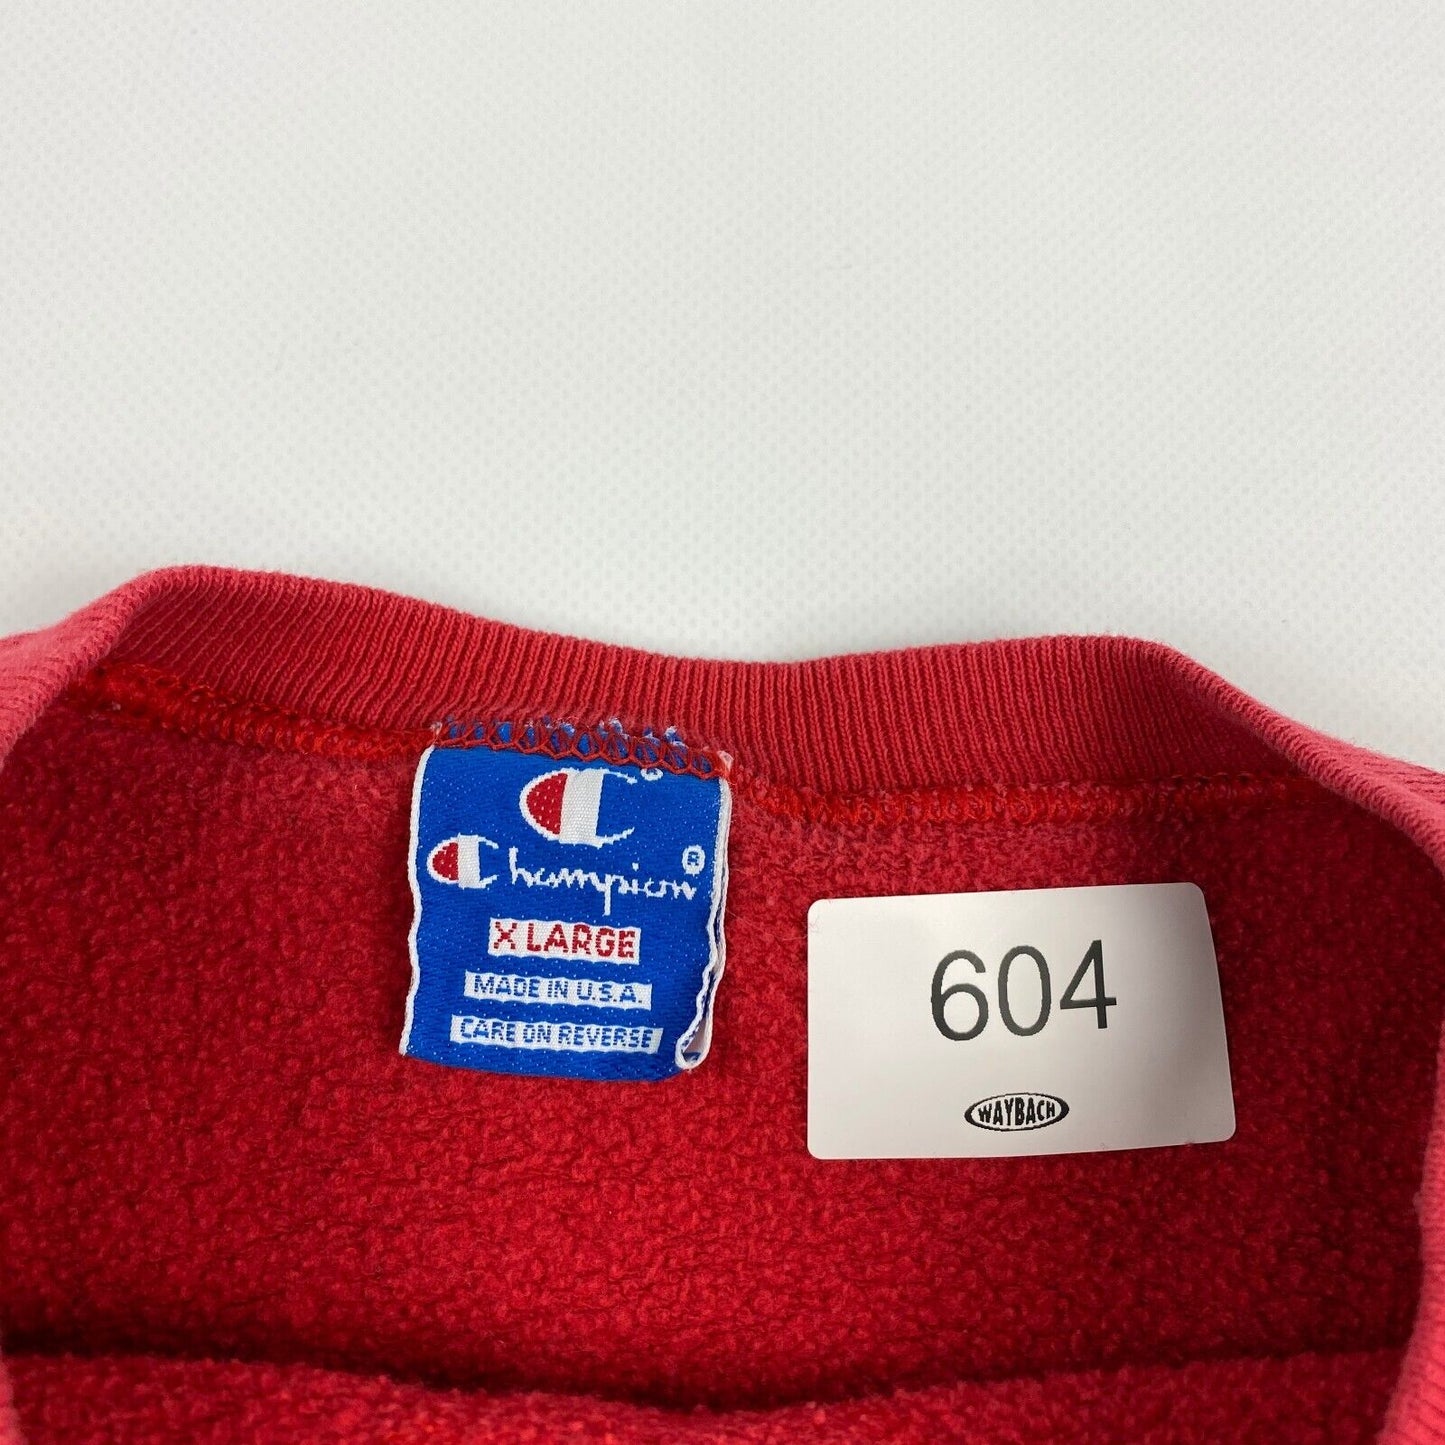 VINTAGE 90s Champion Embroidered Logo Red Crewneck Sweater sz Large Men